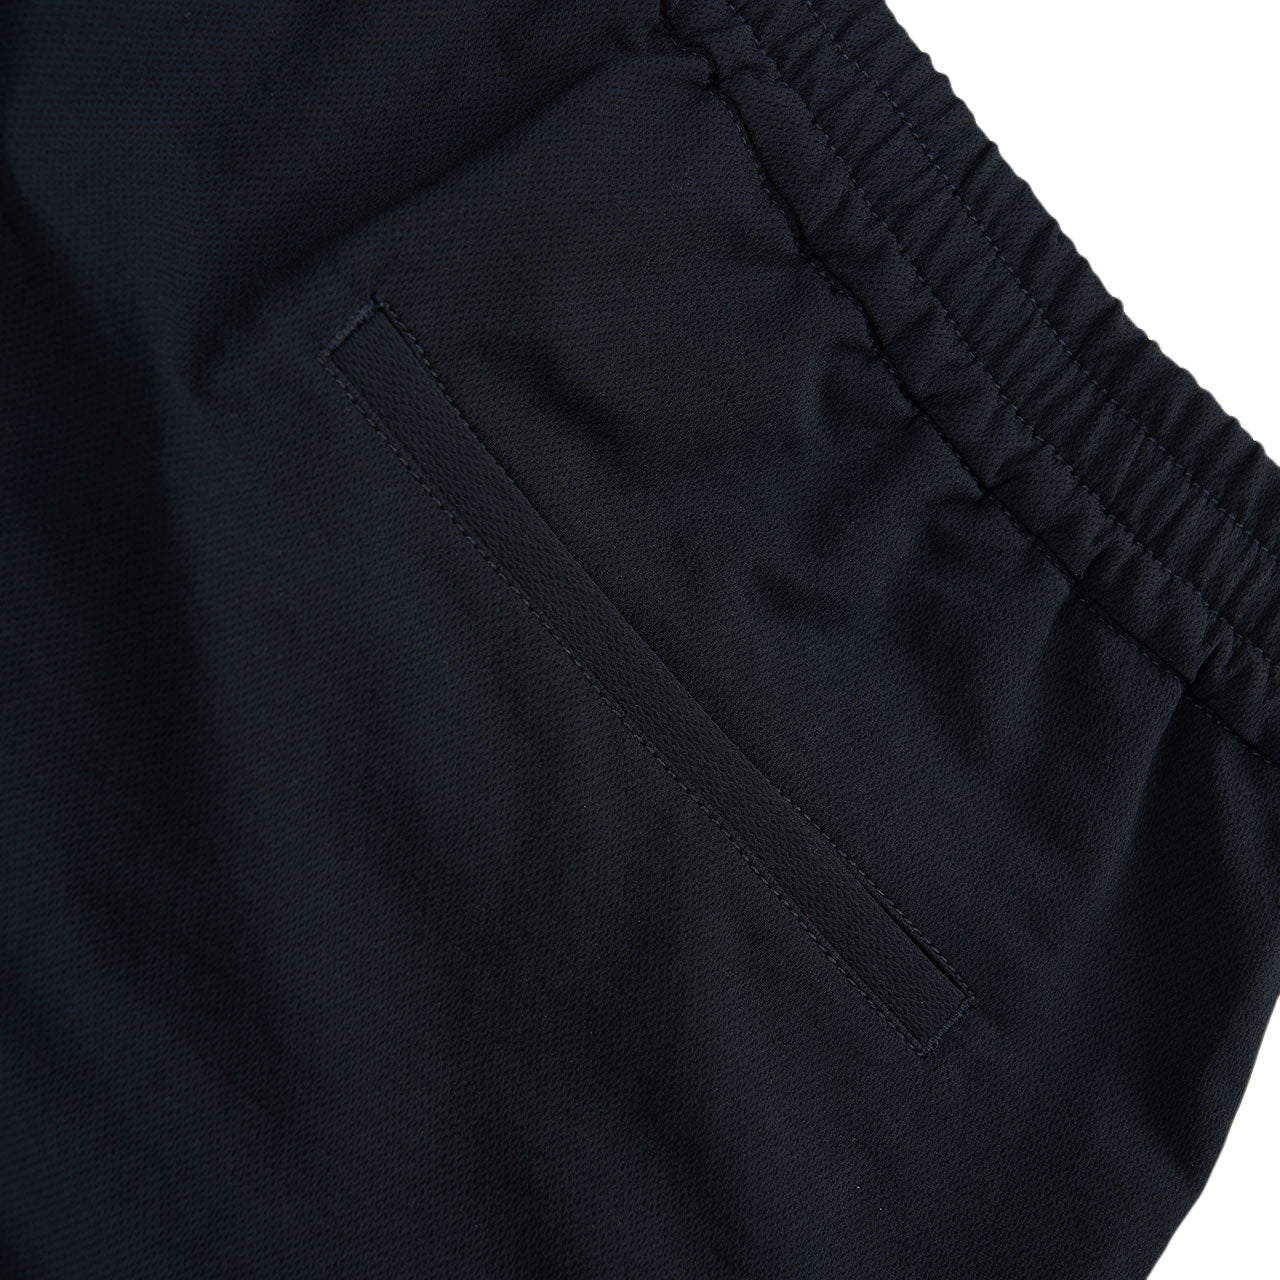 nanamica nanamica wide easy pants (black)